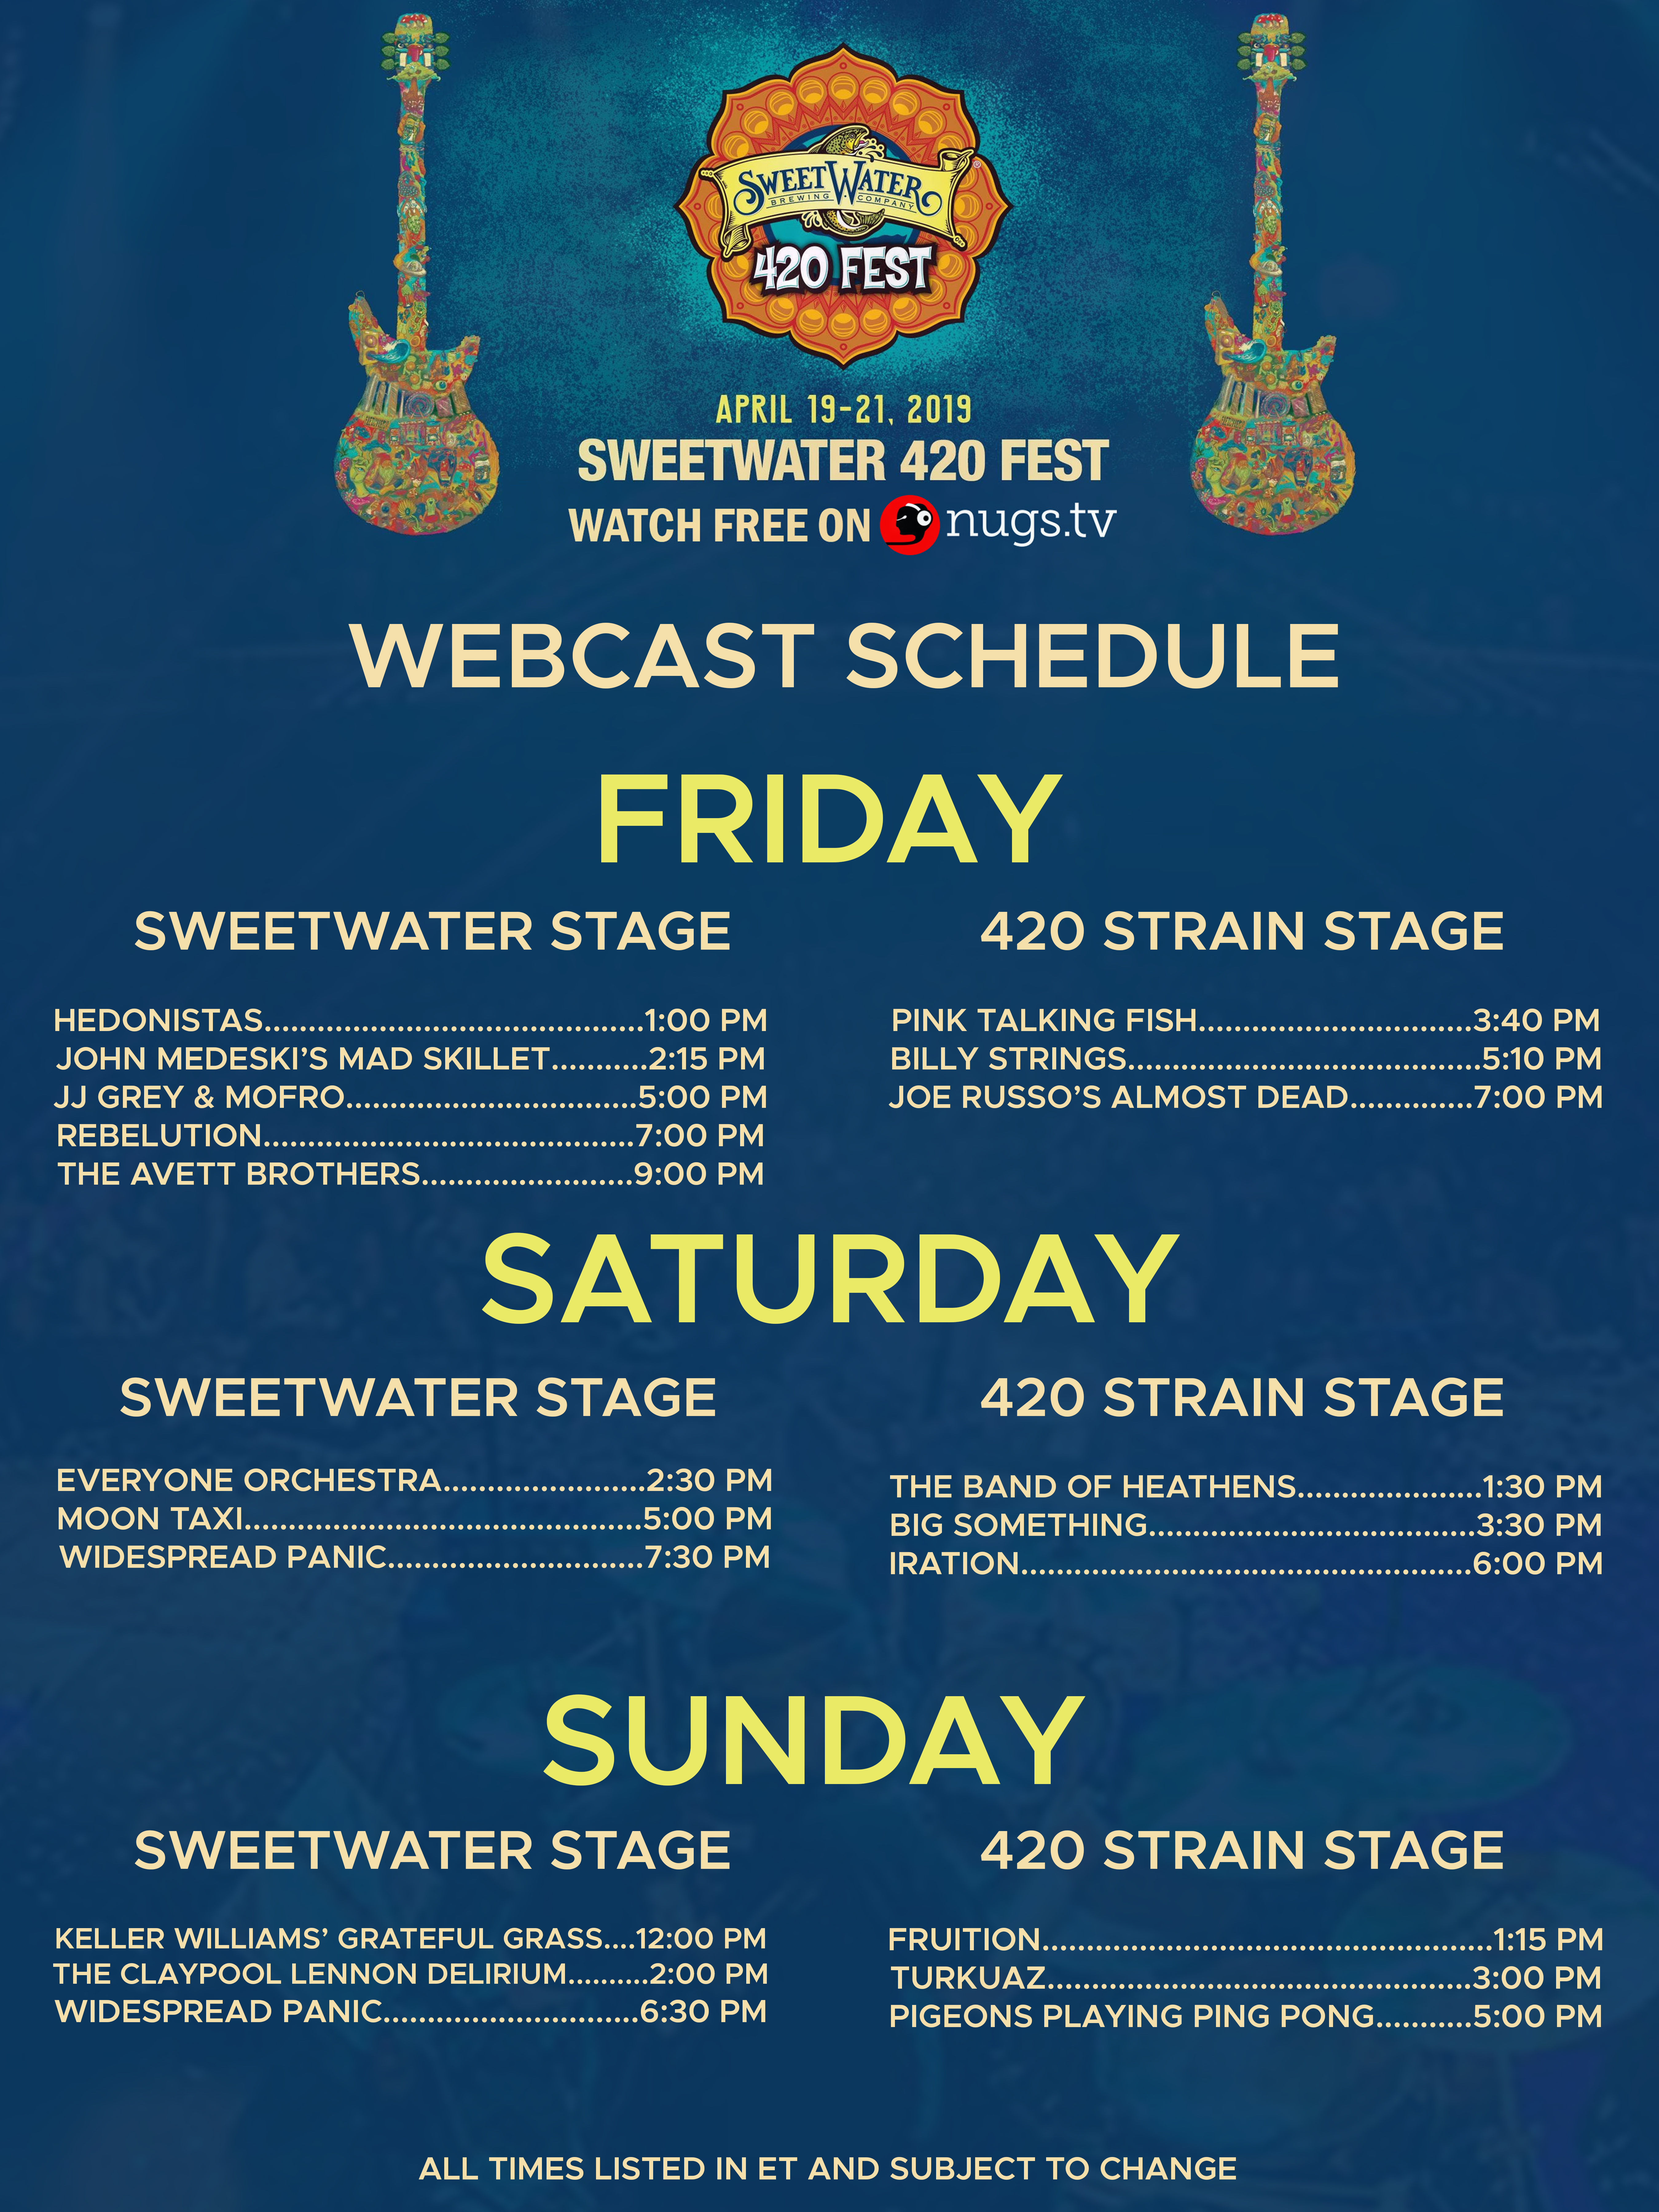 Watch SweetWater 420 Fest Live on nugs.tv